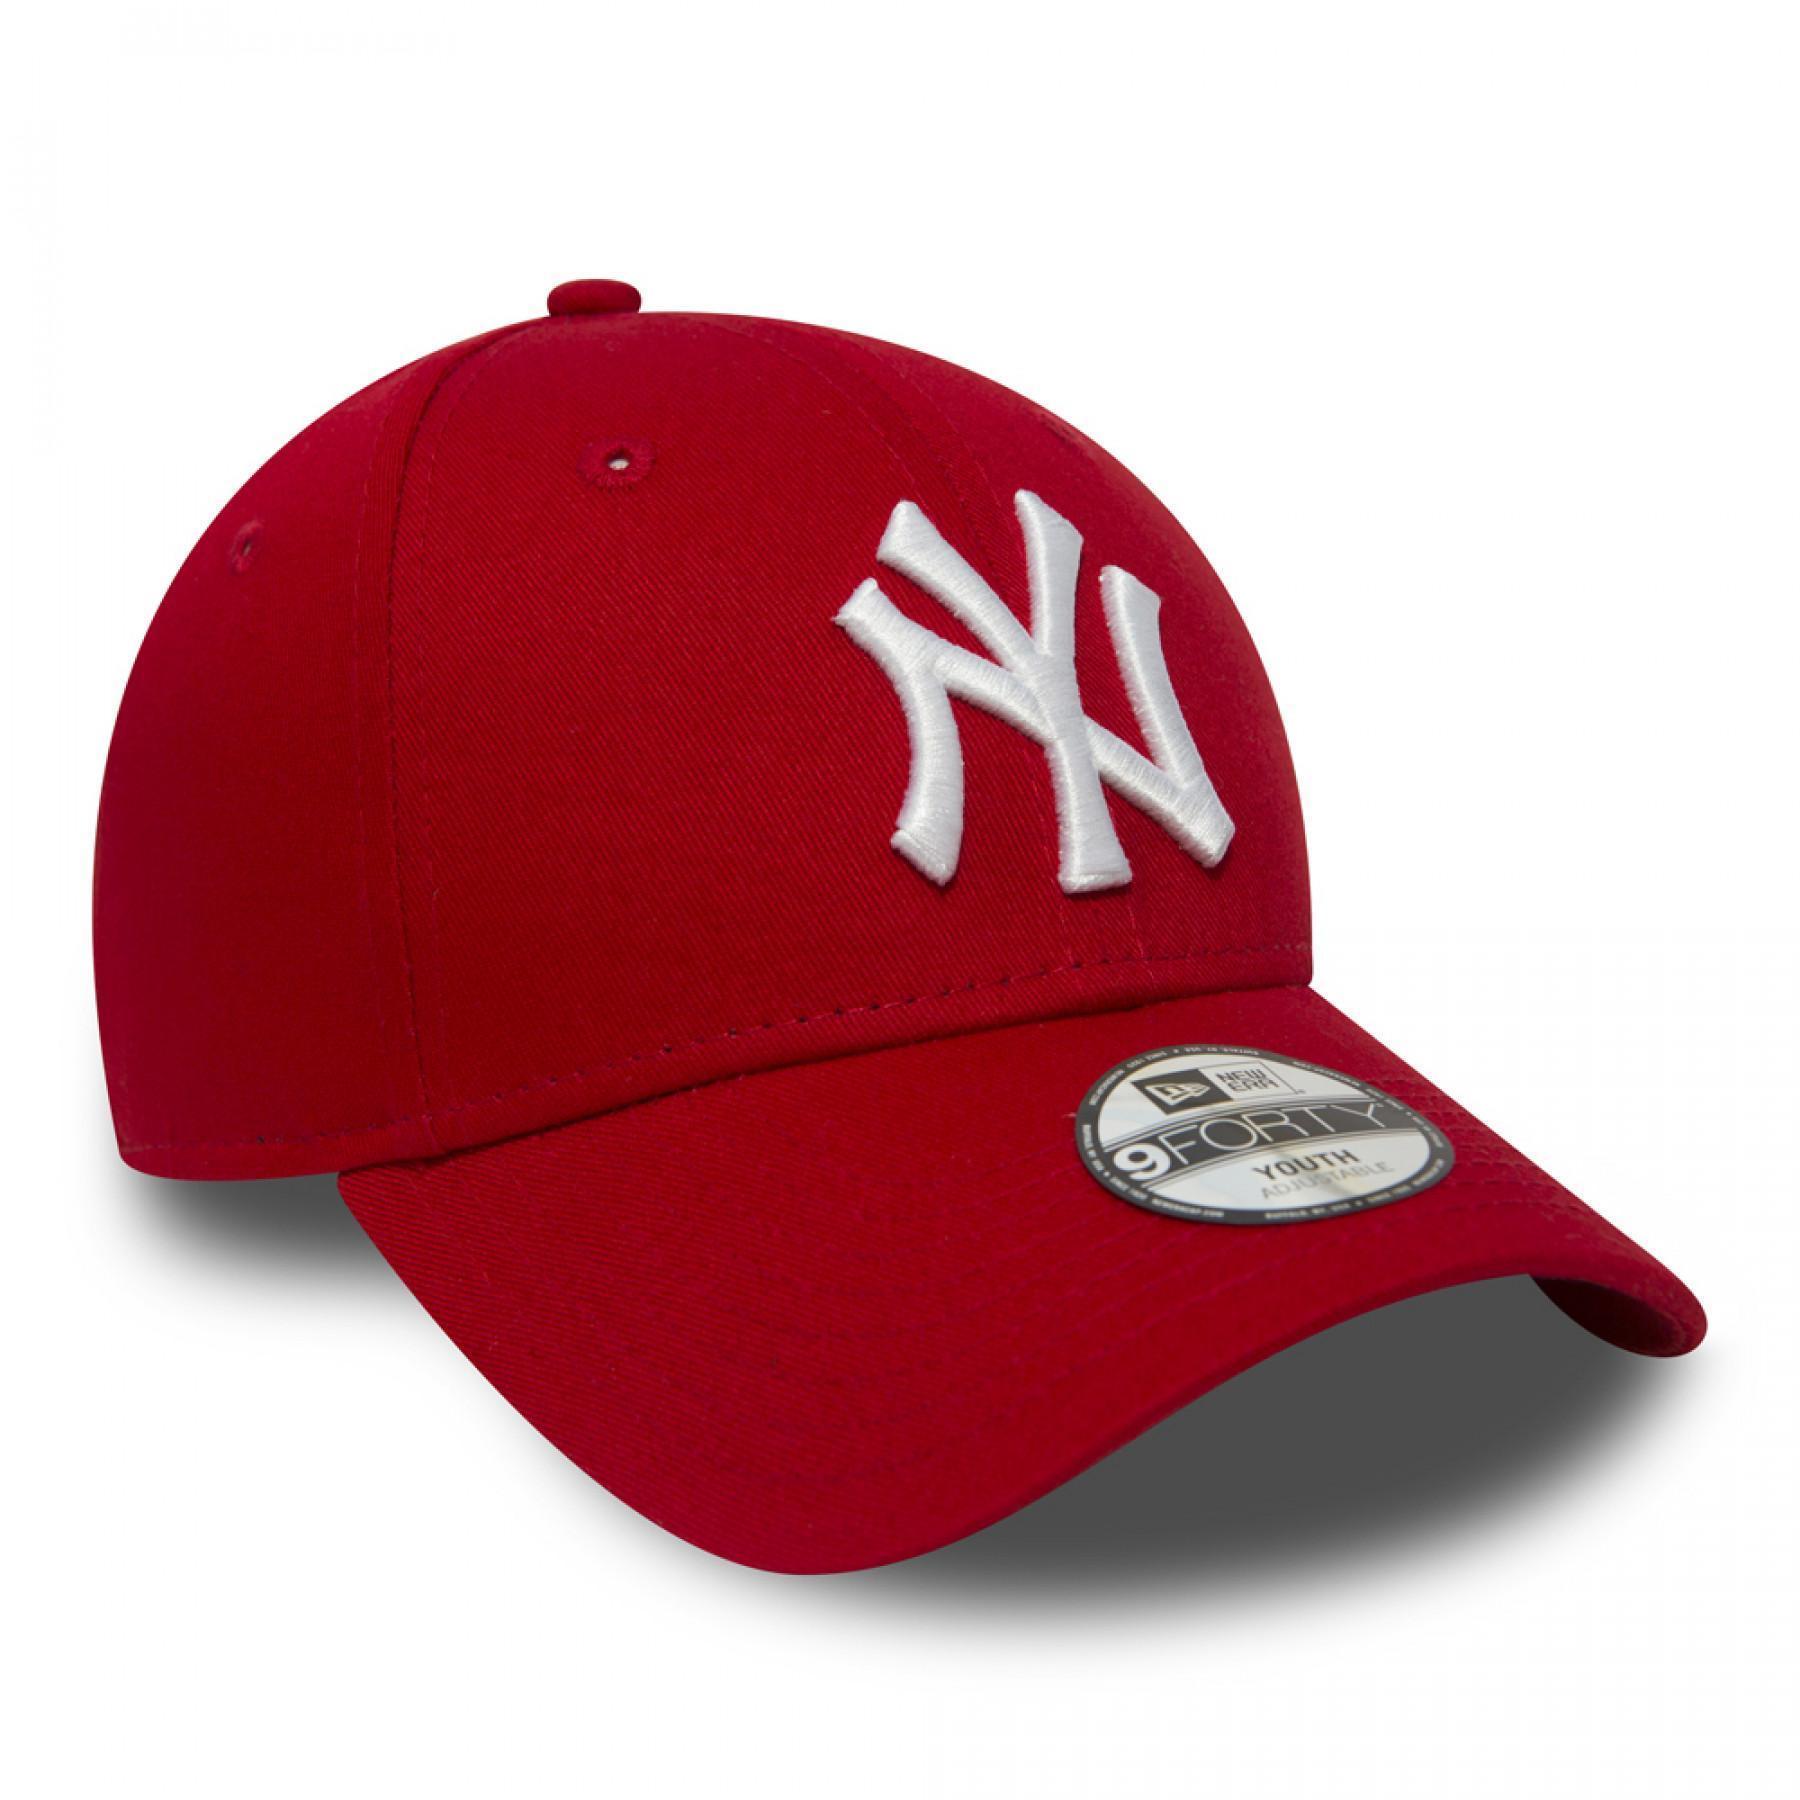 Kapsyl New Era essential 9forty enfant New York Yankees